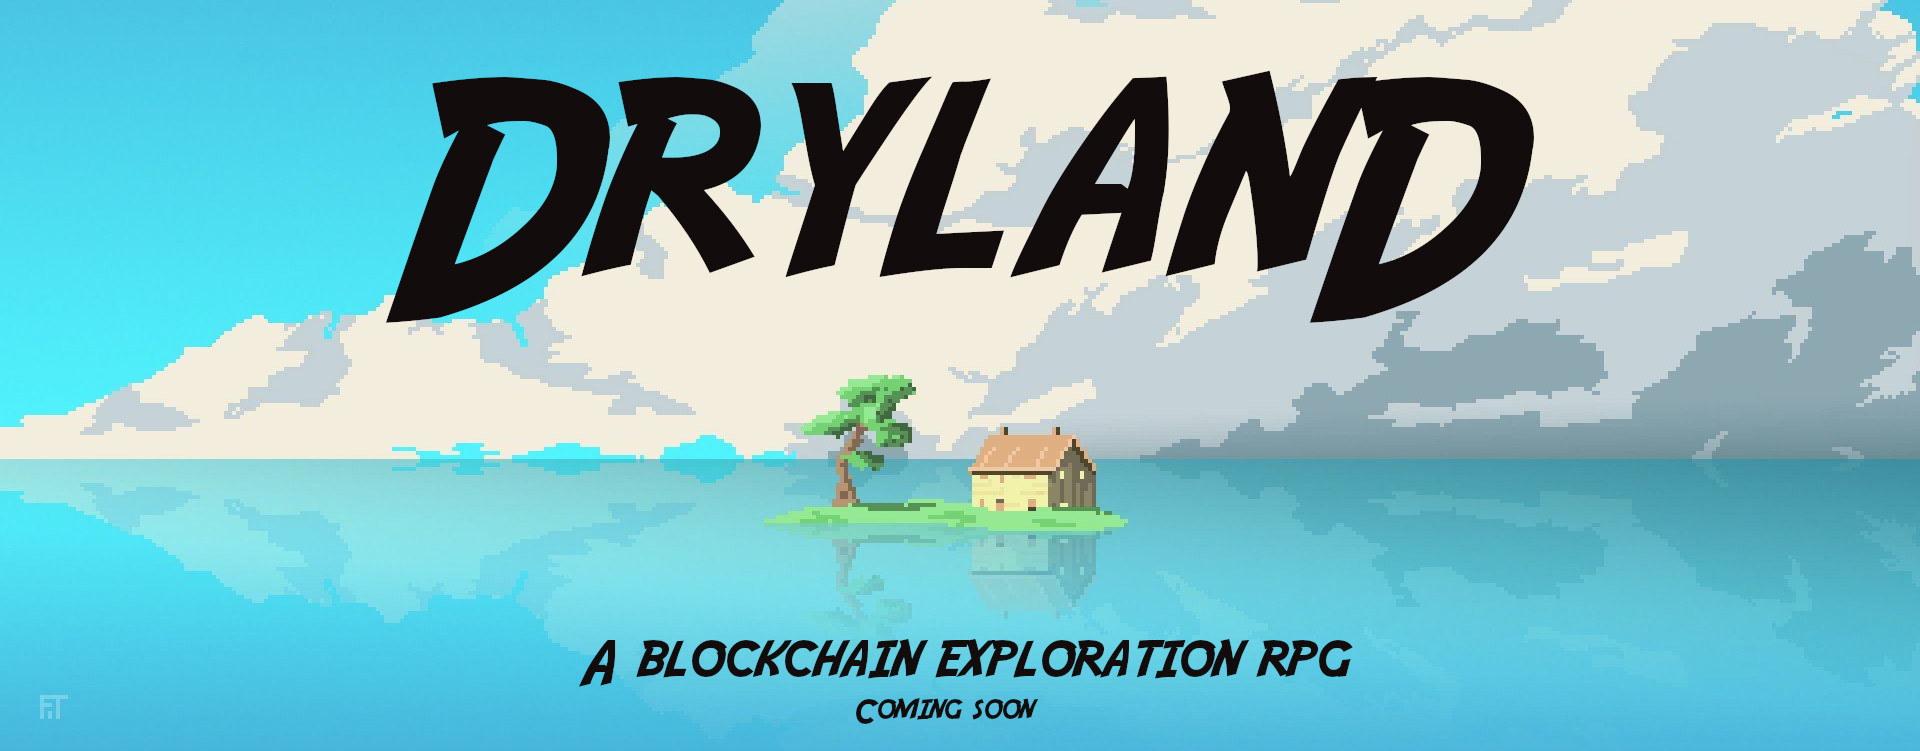 Dryland - Demo prototype